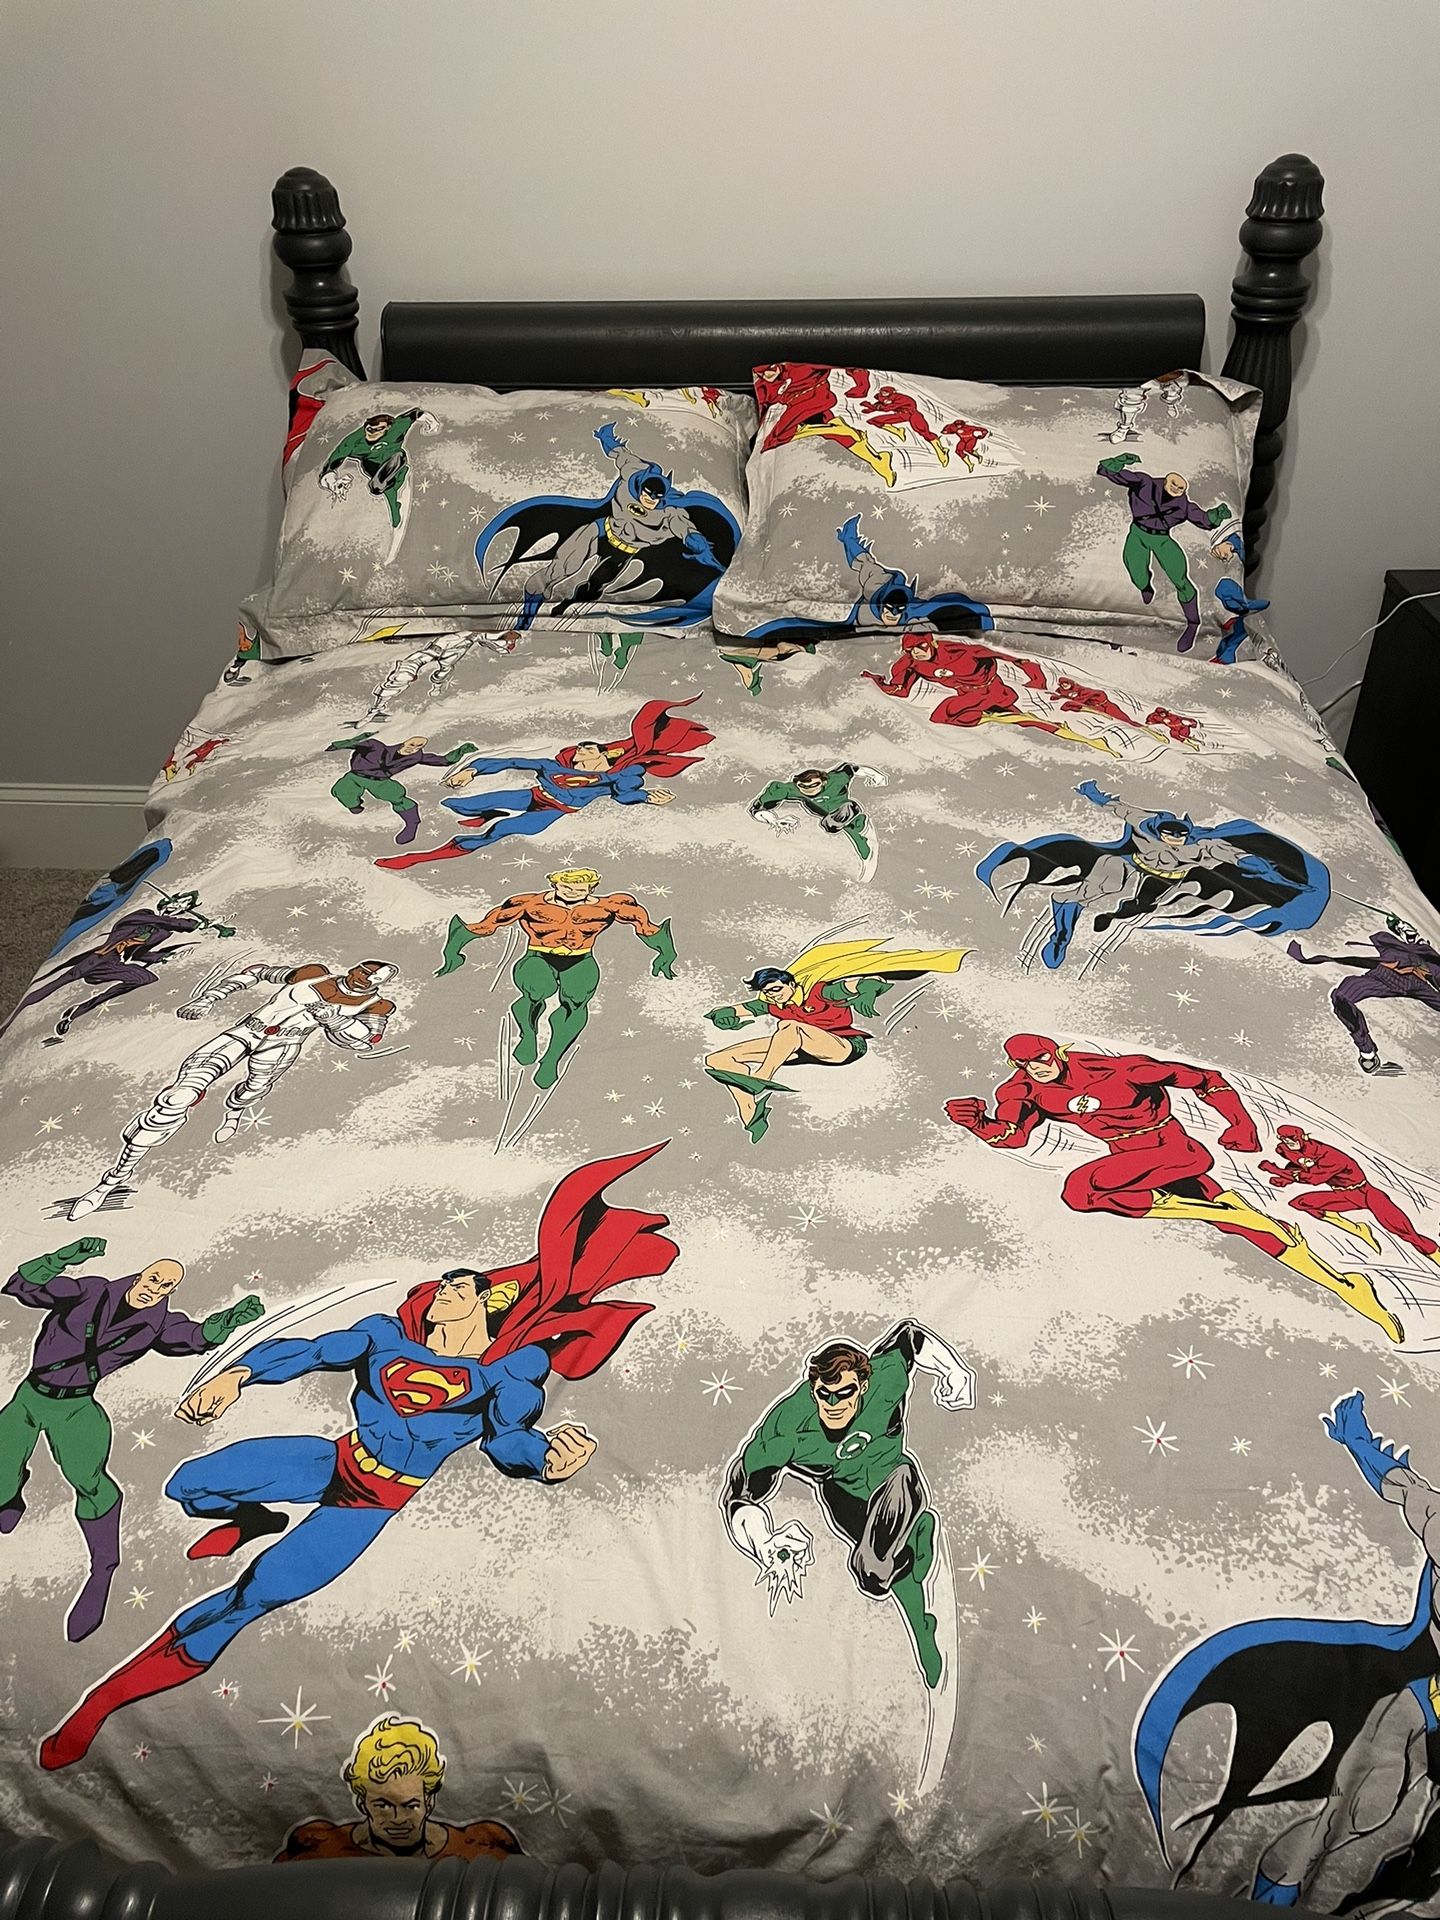 Superhero Room, Bedding and Decor